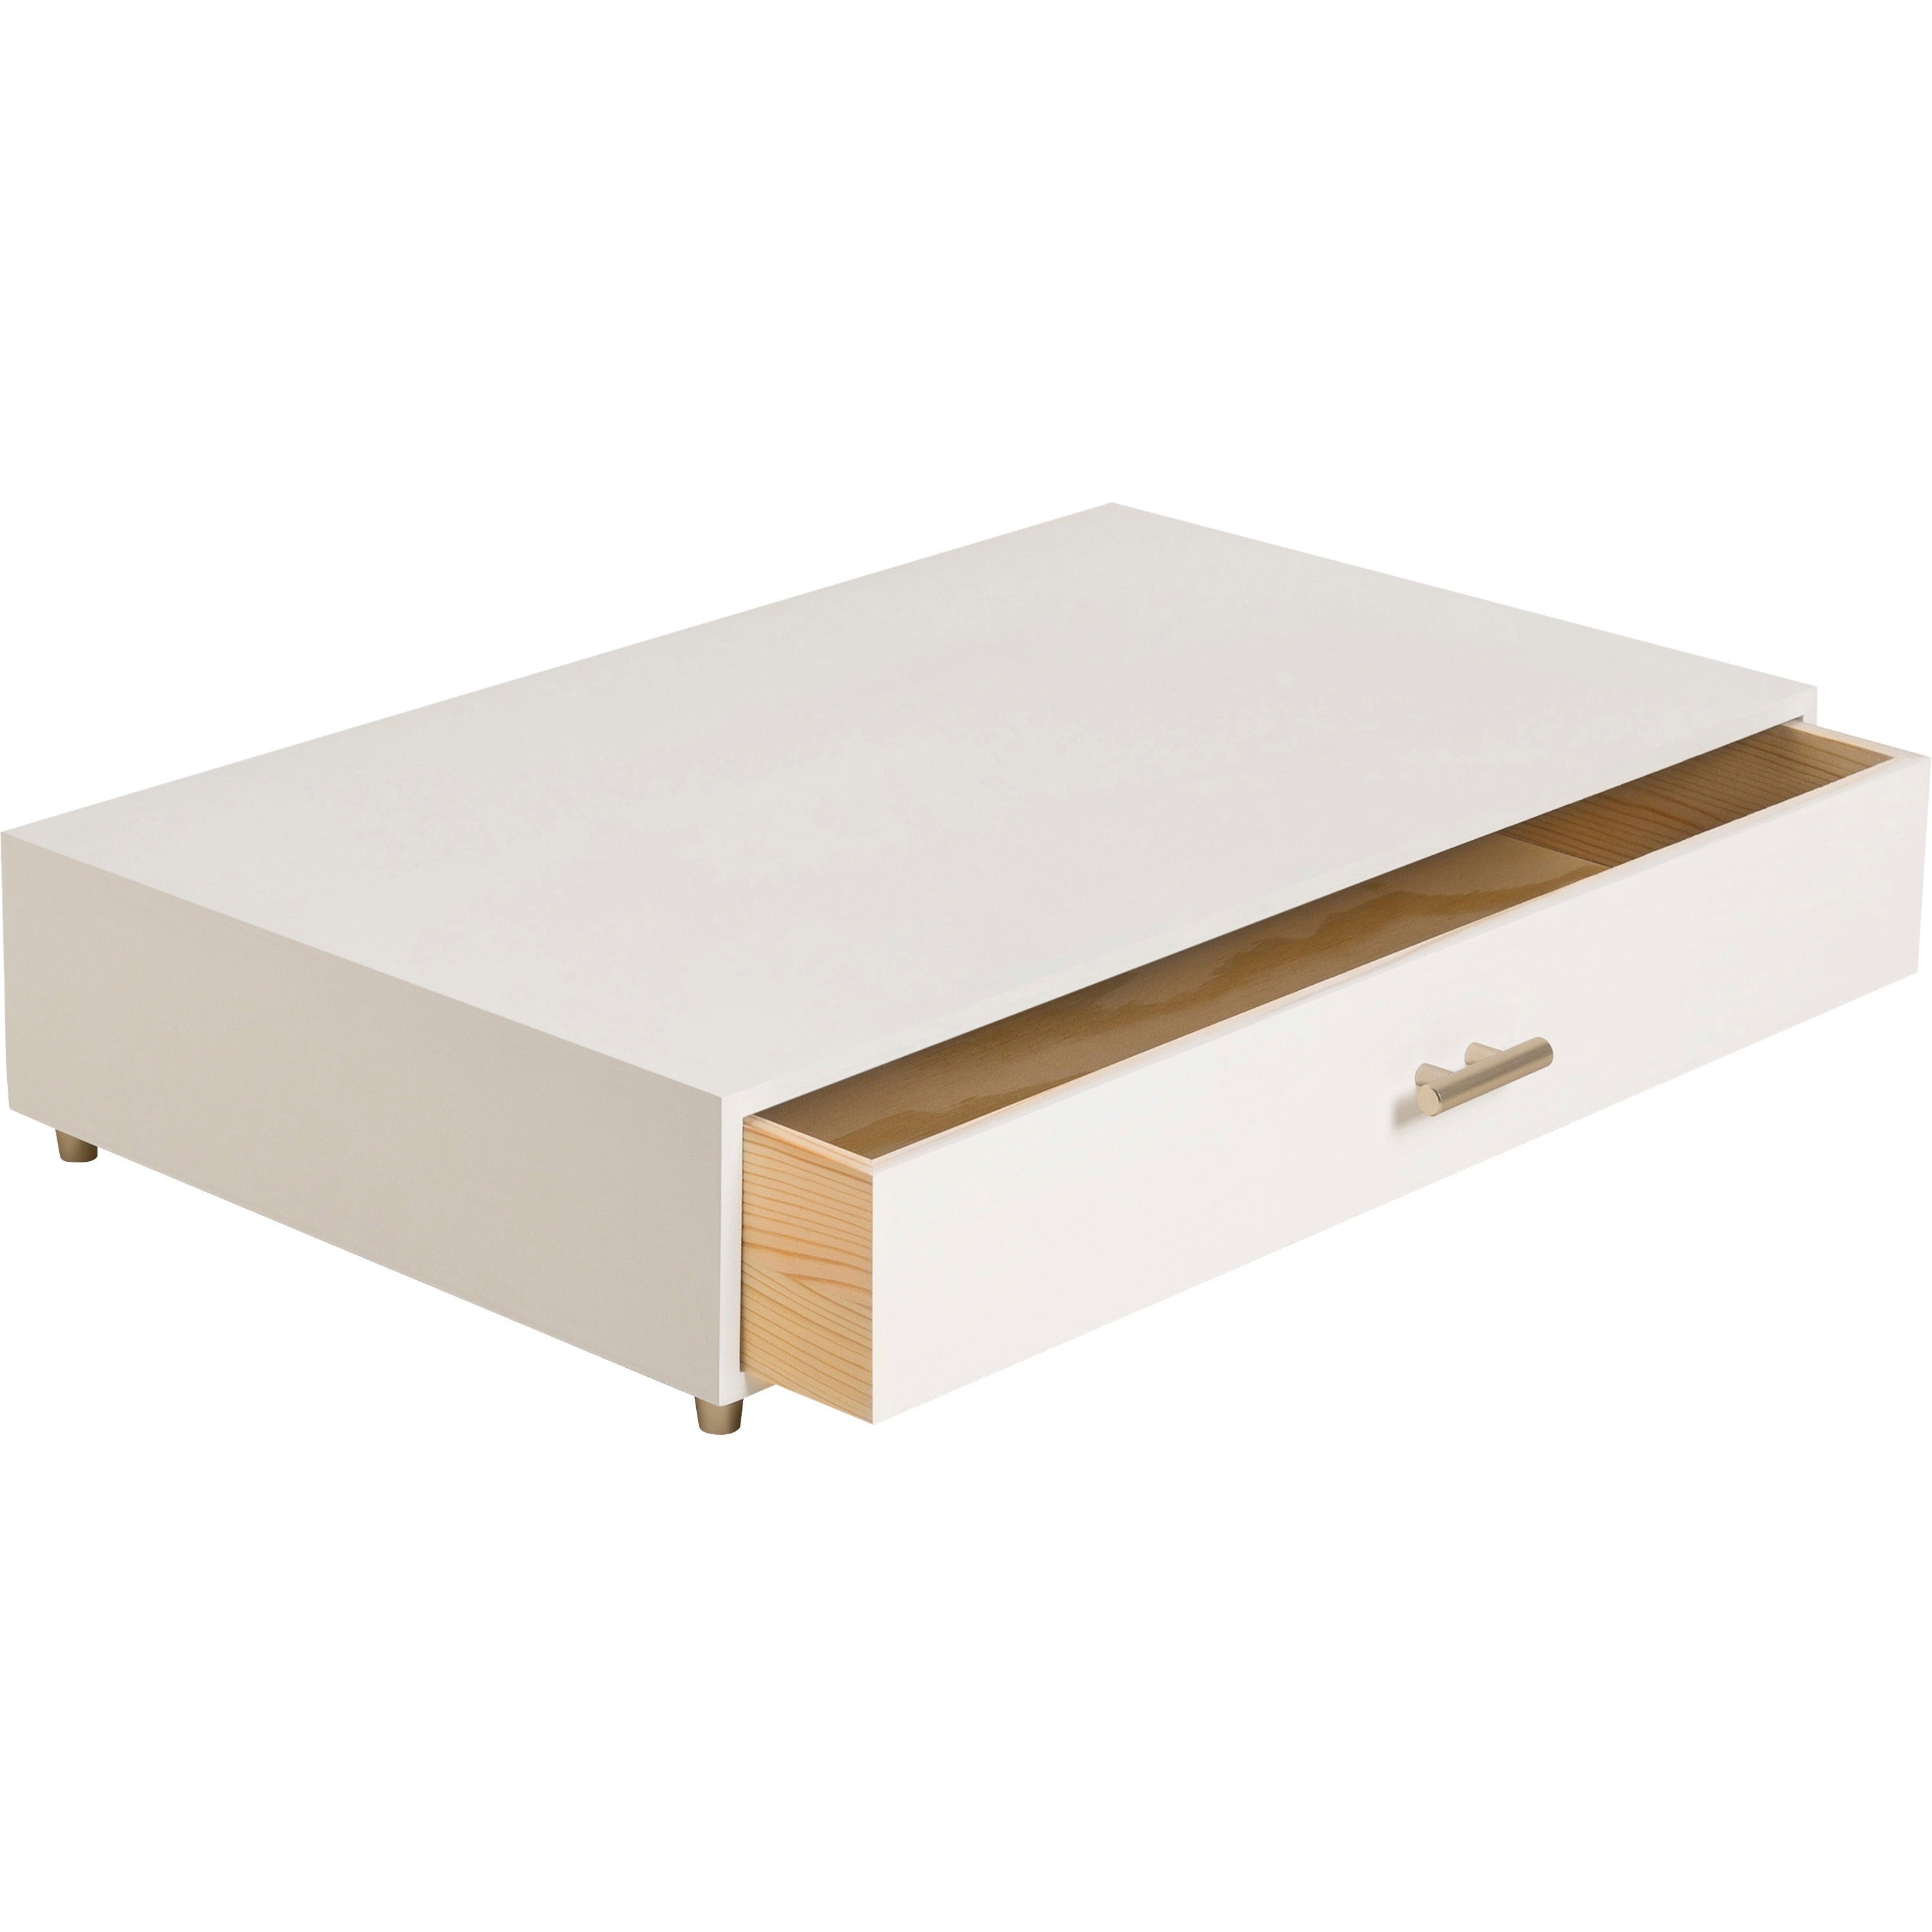 u-brands-juliet-collection-monitor-stand-20-lb-load-capacity-165-height-x-103-width-x-35-depth-desktop-table-pine-wood-brass-white_ubr3460u0206 - 2